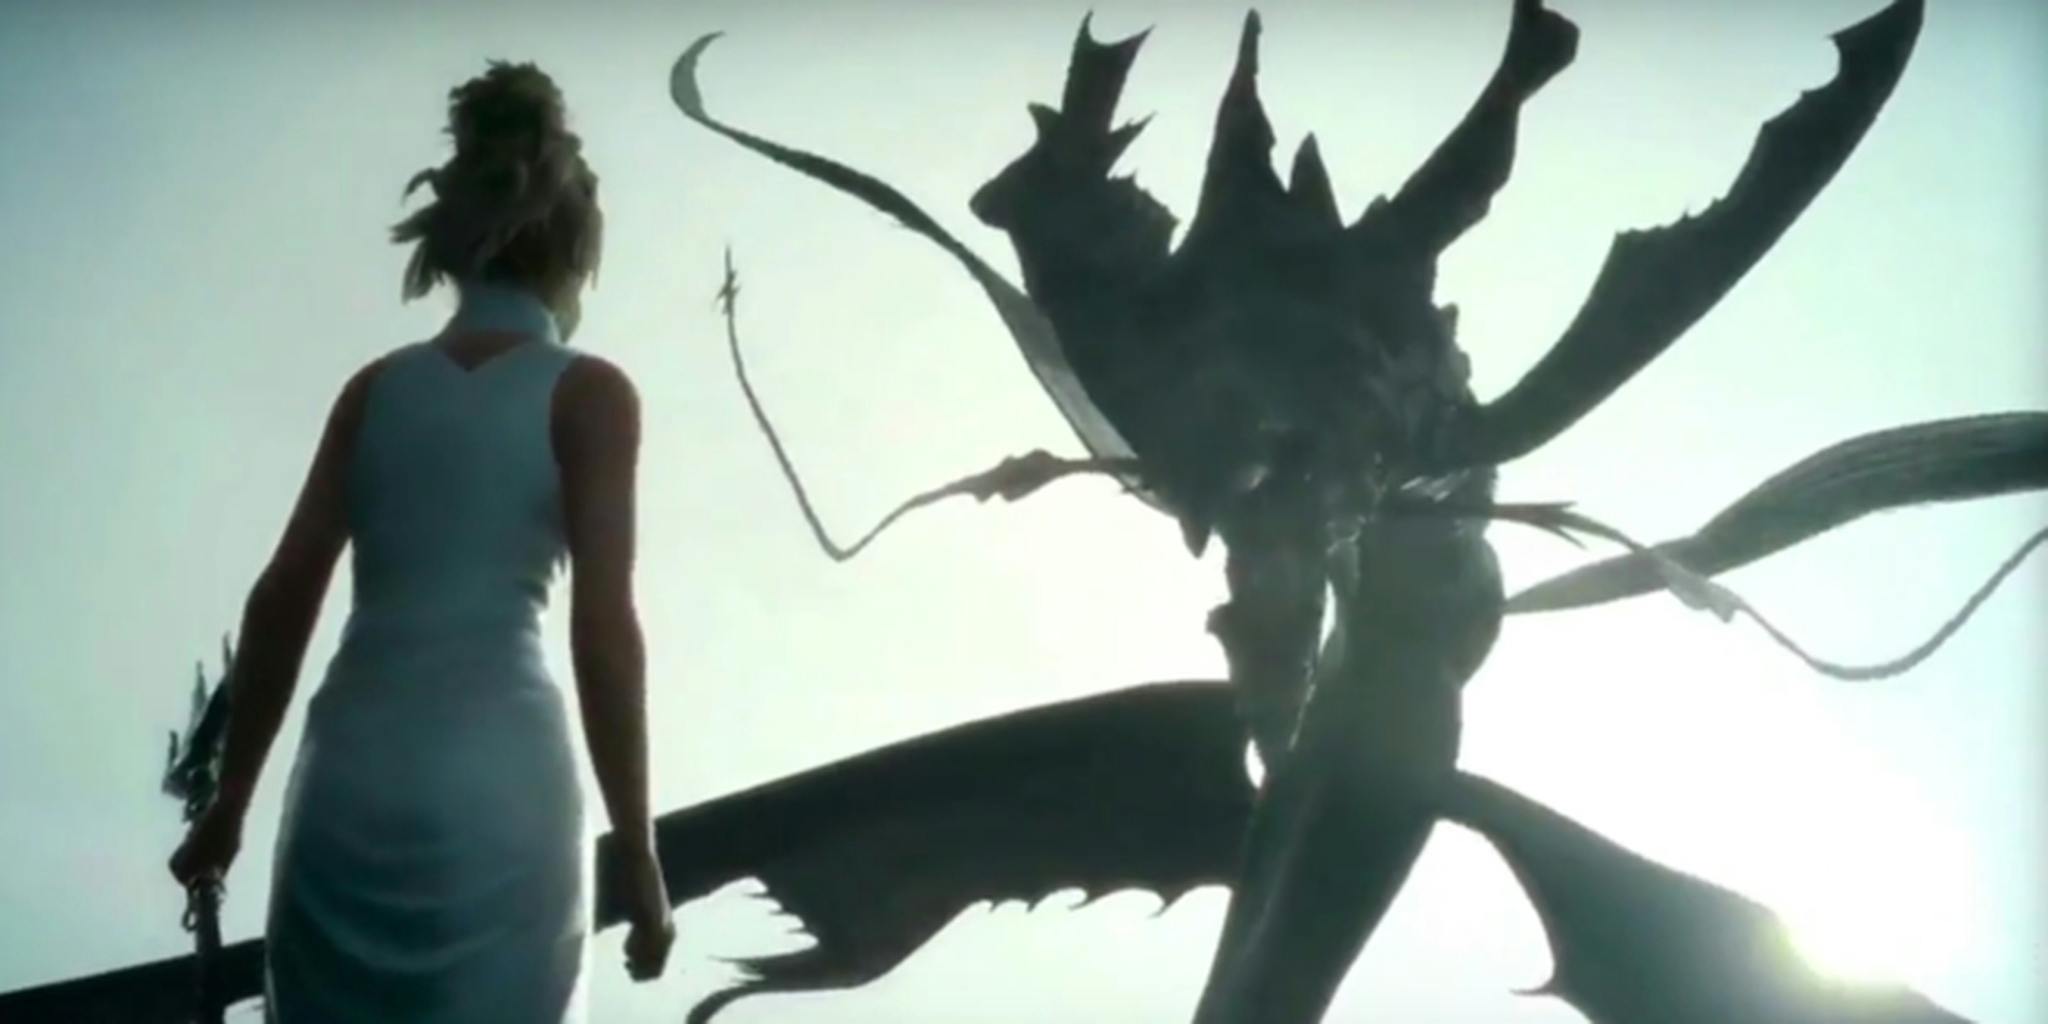 Final Fantasy XV Gets A Five-Episode Anime Prequel [Update: Watch